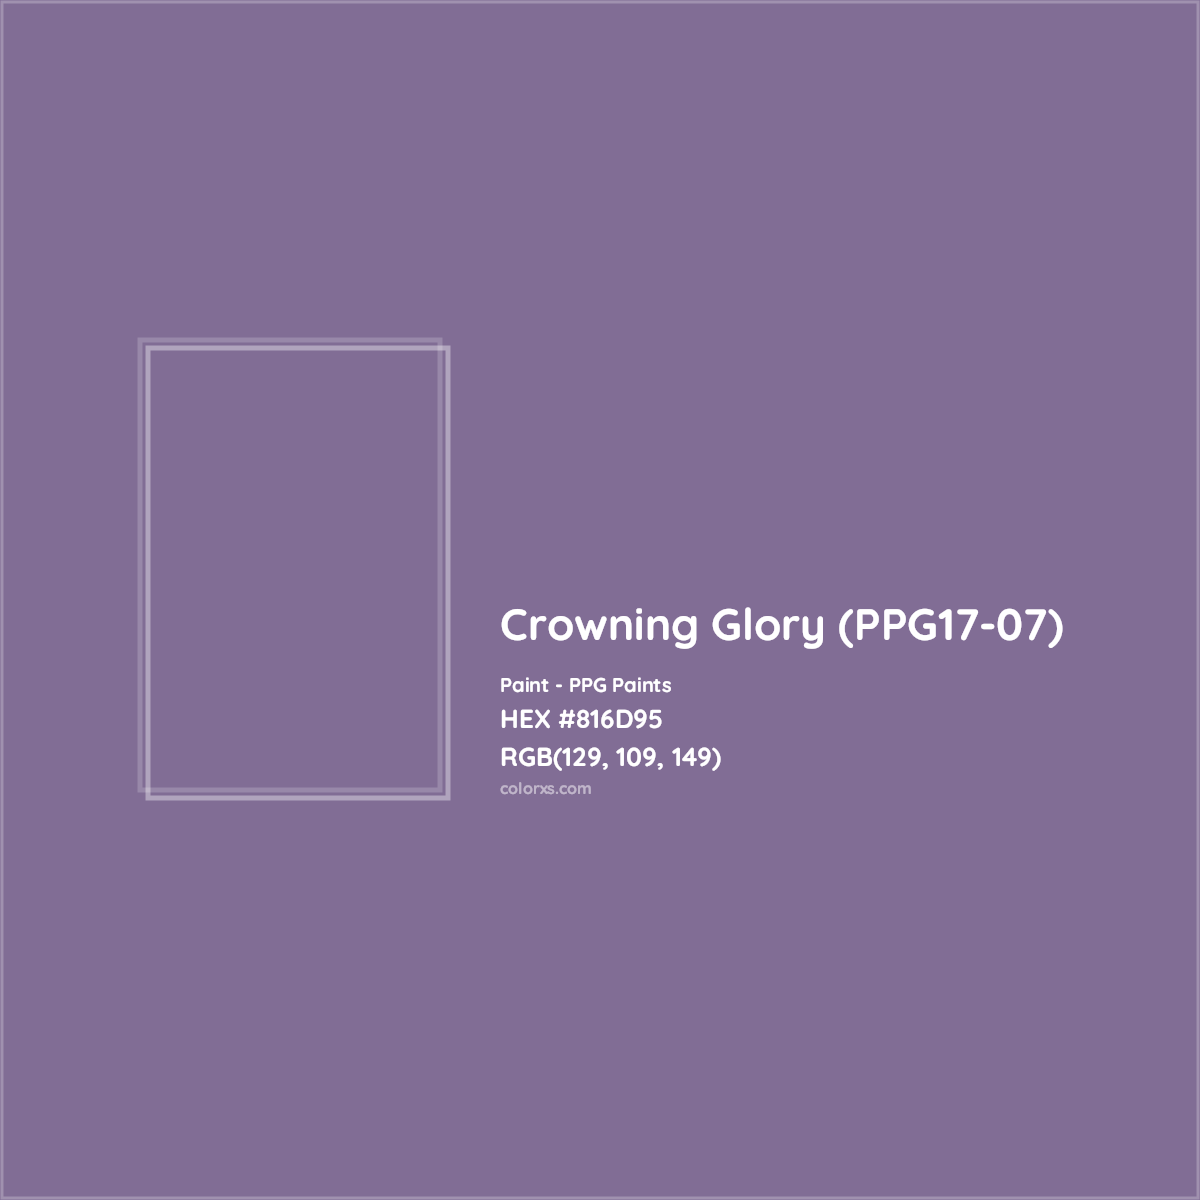 HEX #816D95 Crowning Glory (PPG17-07) Paint PPG Paints - Color Code